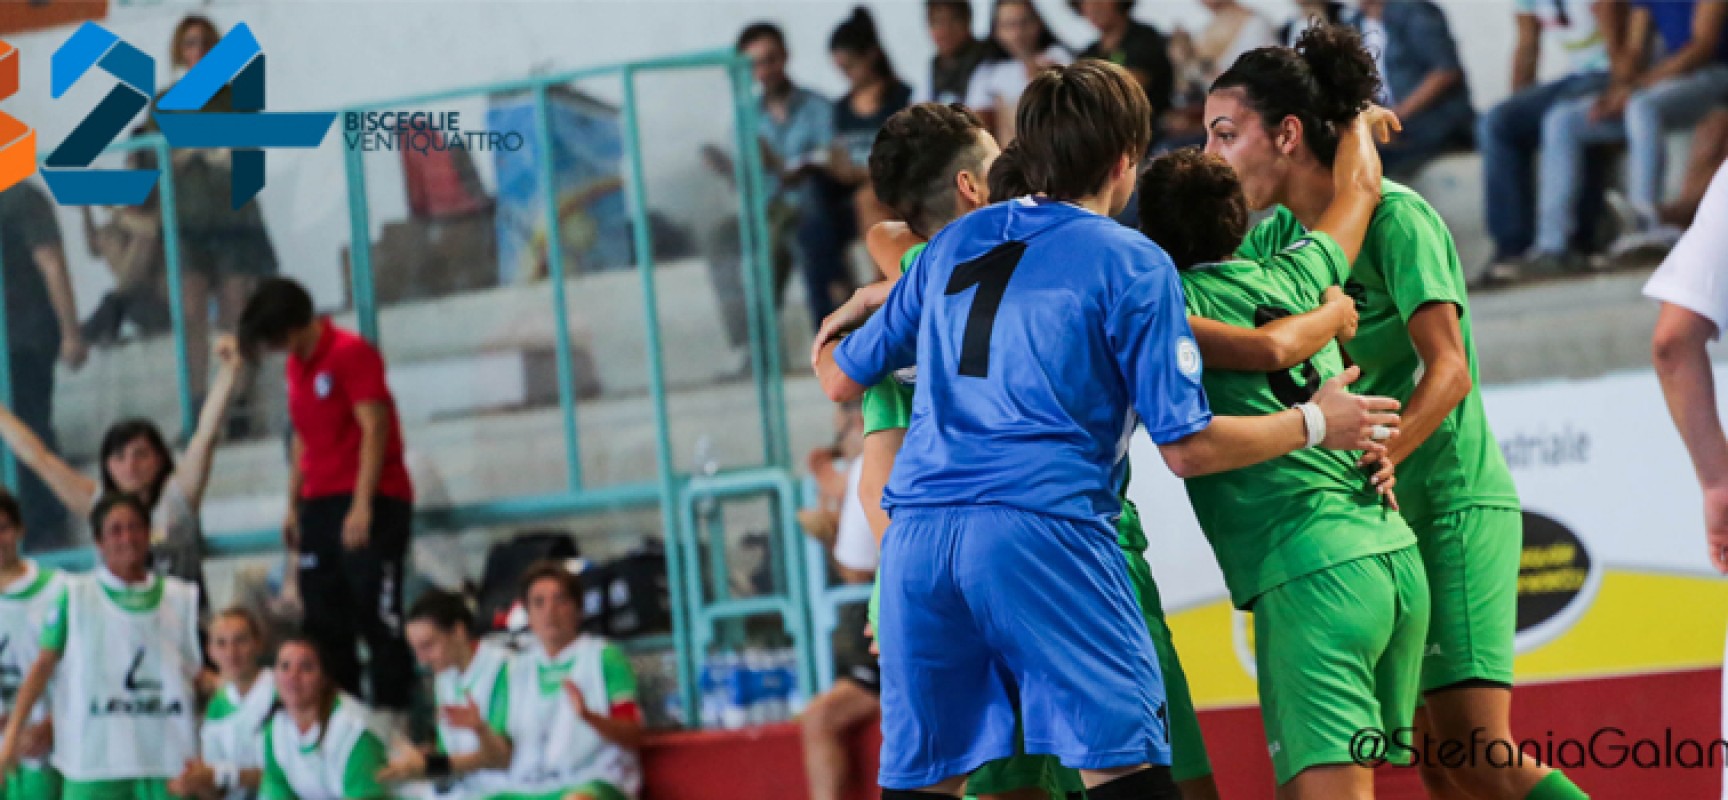 Calcio a 5 femminile, serie A: esordio in Calabria per l’Arcadia Bisceglie